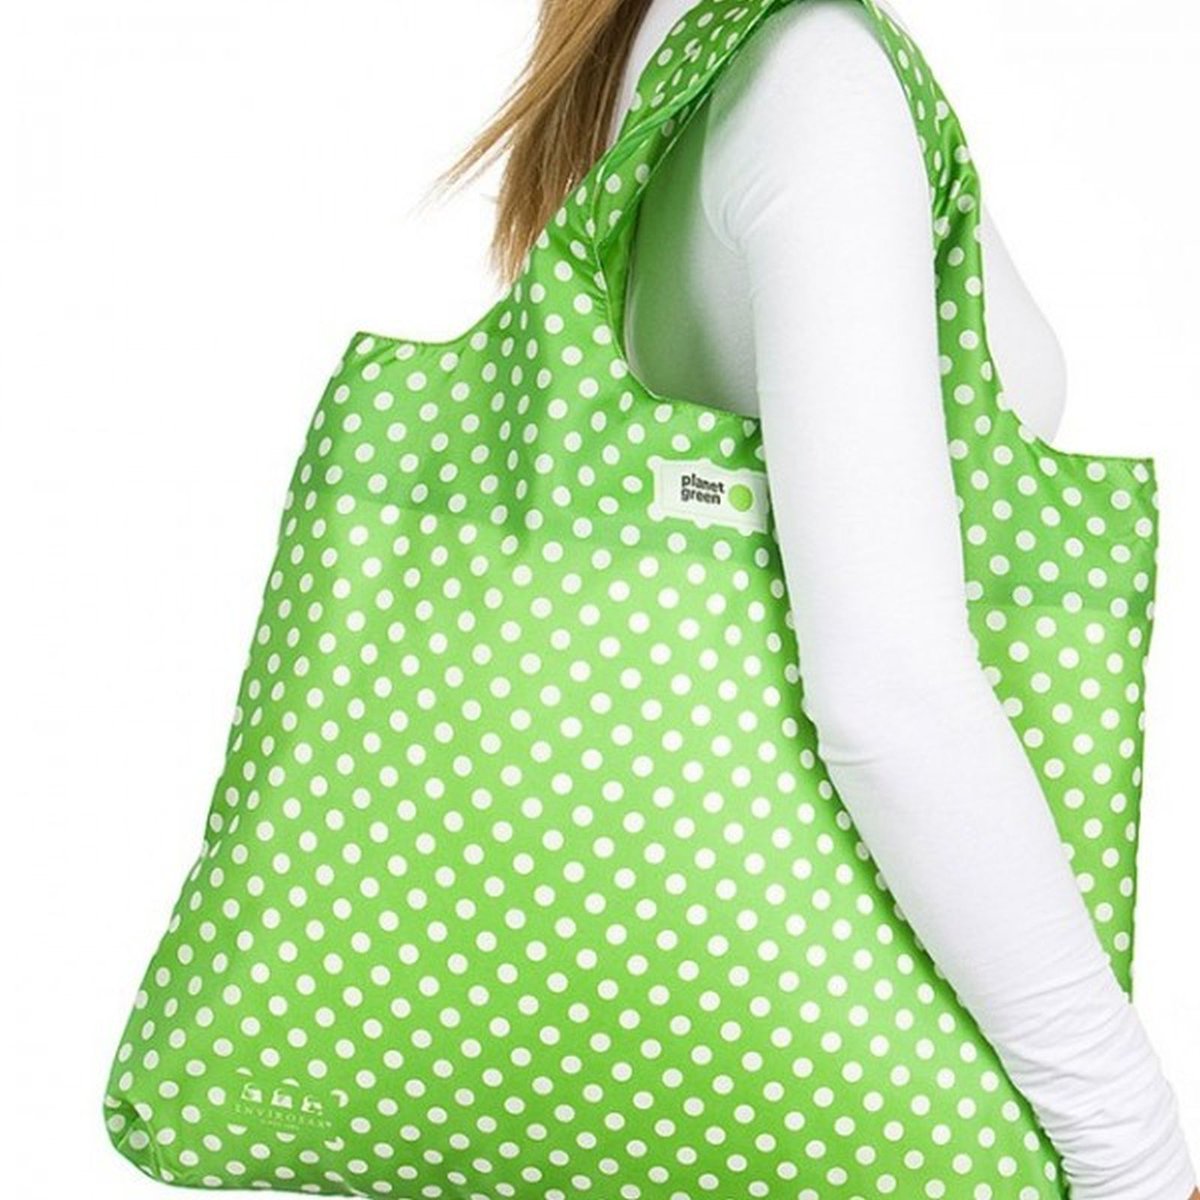 Envirosax reusable roll-up, foldable, shoulder shopping bag ; Planet Green polka dot deign #Envirosax #reusable #reuse #rollup #foldable #shoulderbag #giftidea #giftfor #green #spots #dotty #polkadot #tote #bag #grocery #beach #swim #Bbuys ebay.co.uk/itm/2714388491… via @eBay_UK